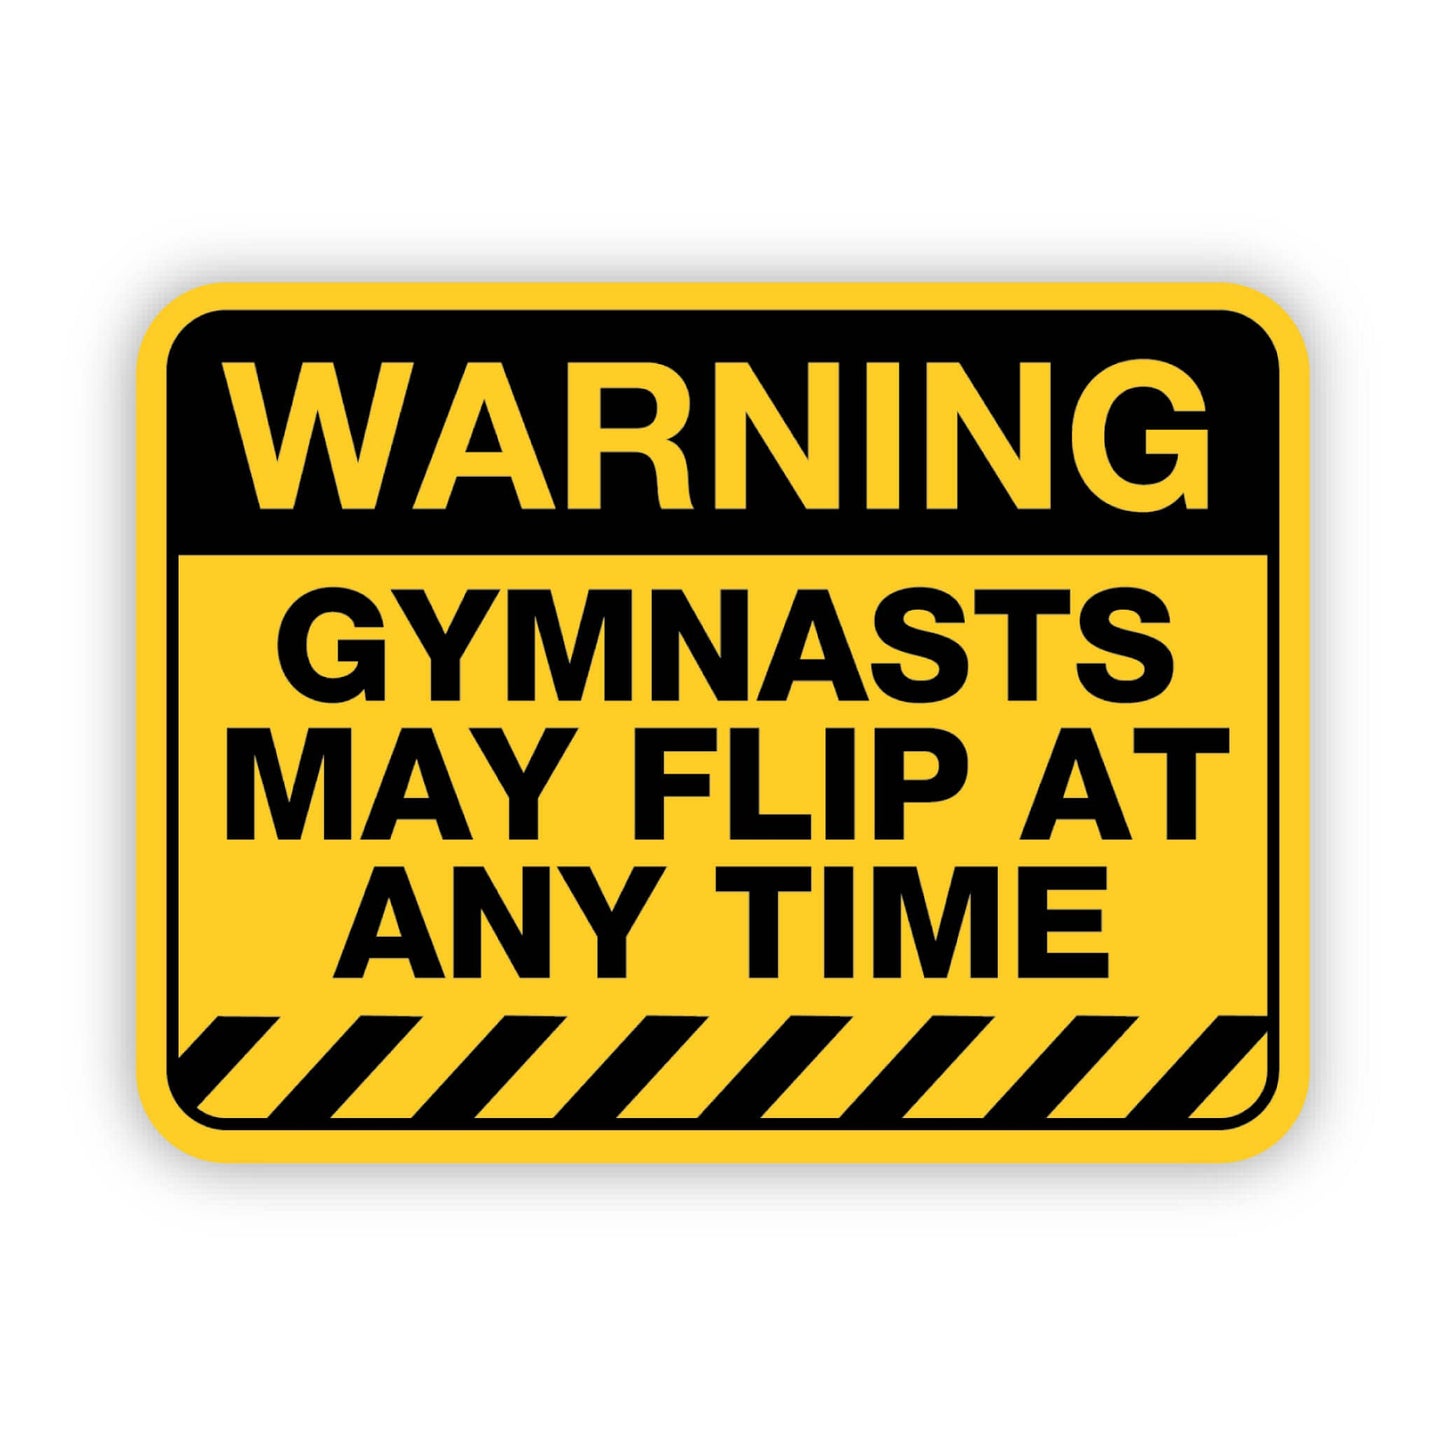 Warning: Gymnasts May Flip Vinyl Sticker, 3" x 2.3"